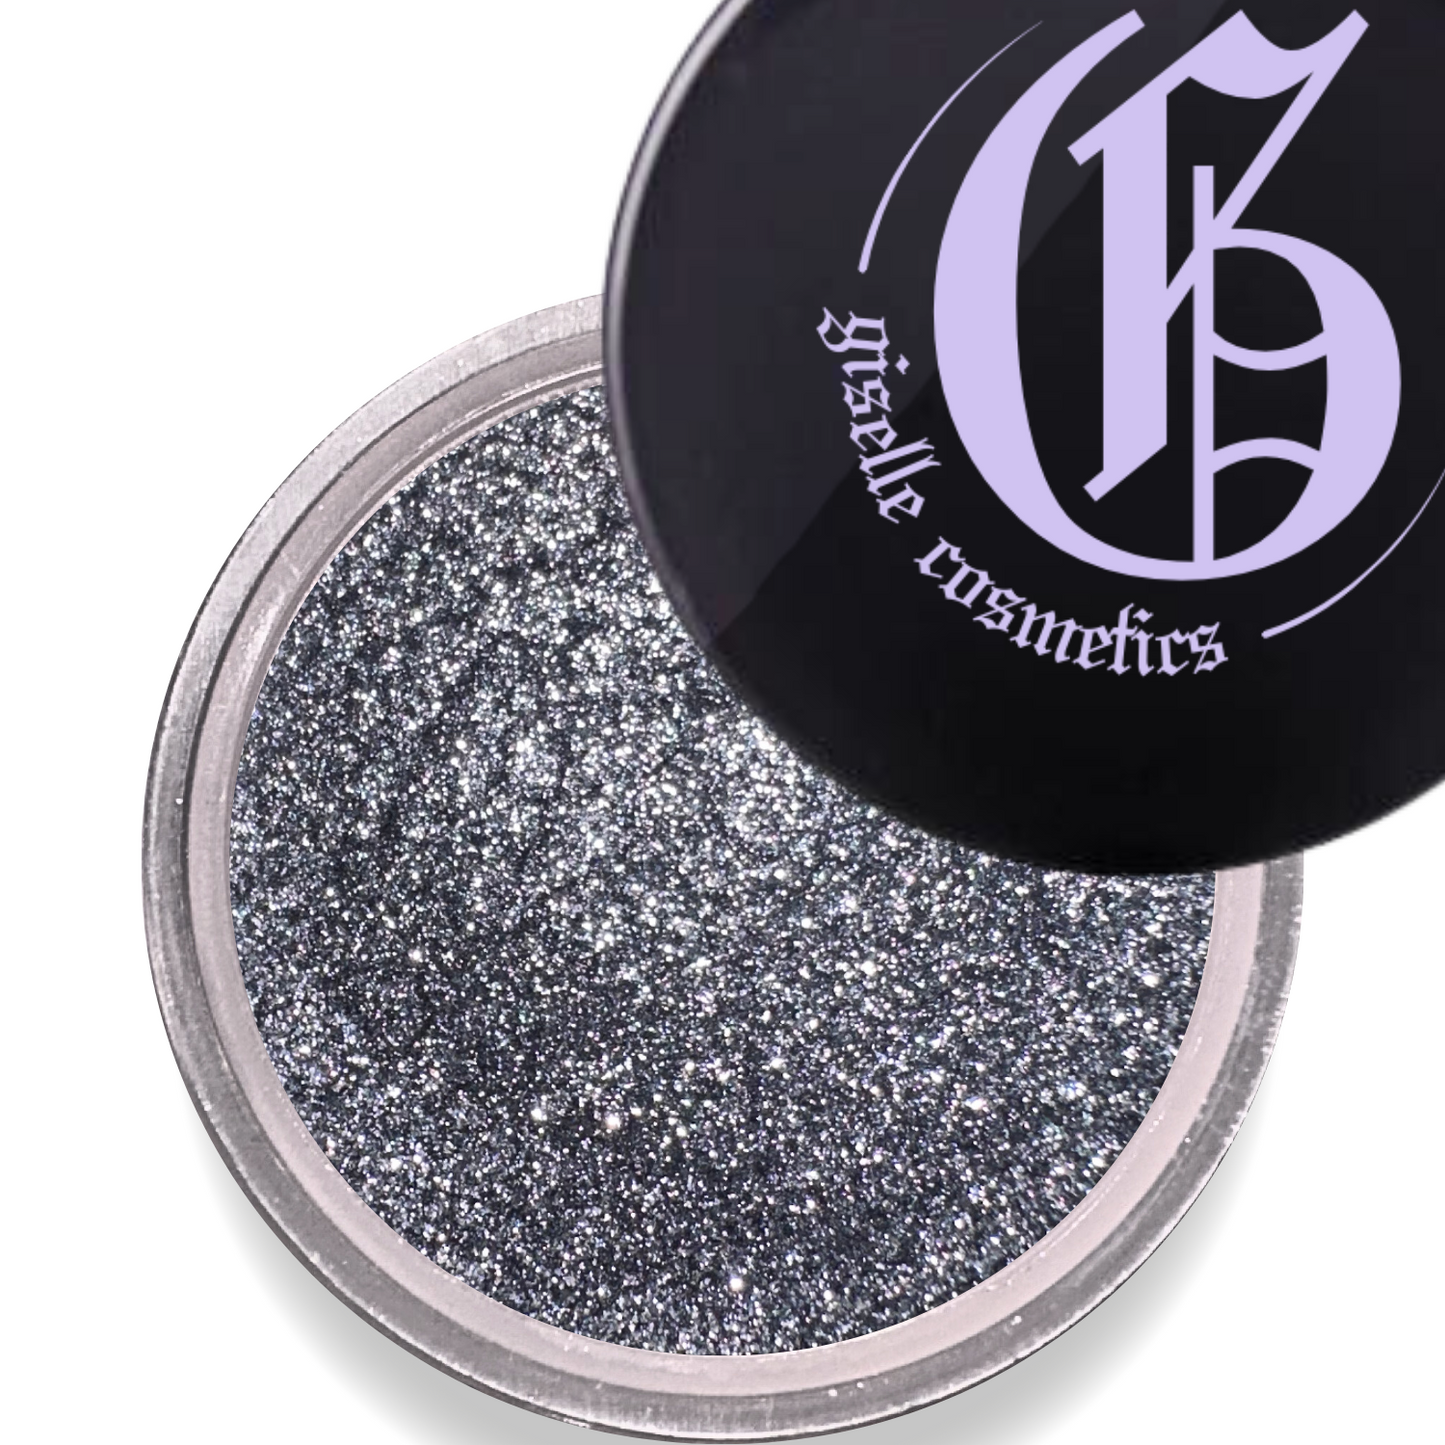 Black Diamond Loose Powder Mineral Eyeshadow Single 3g